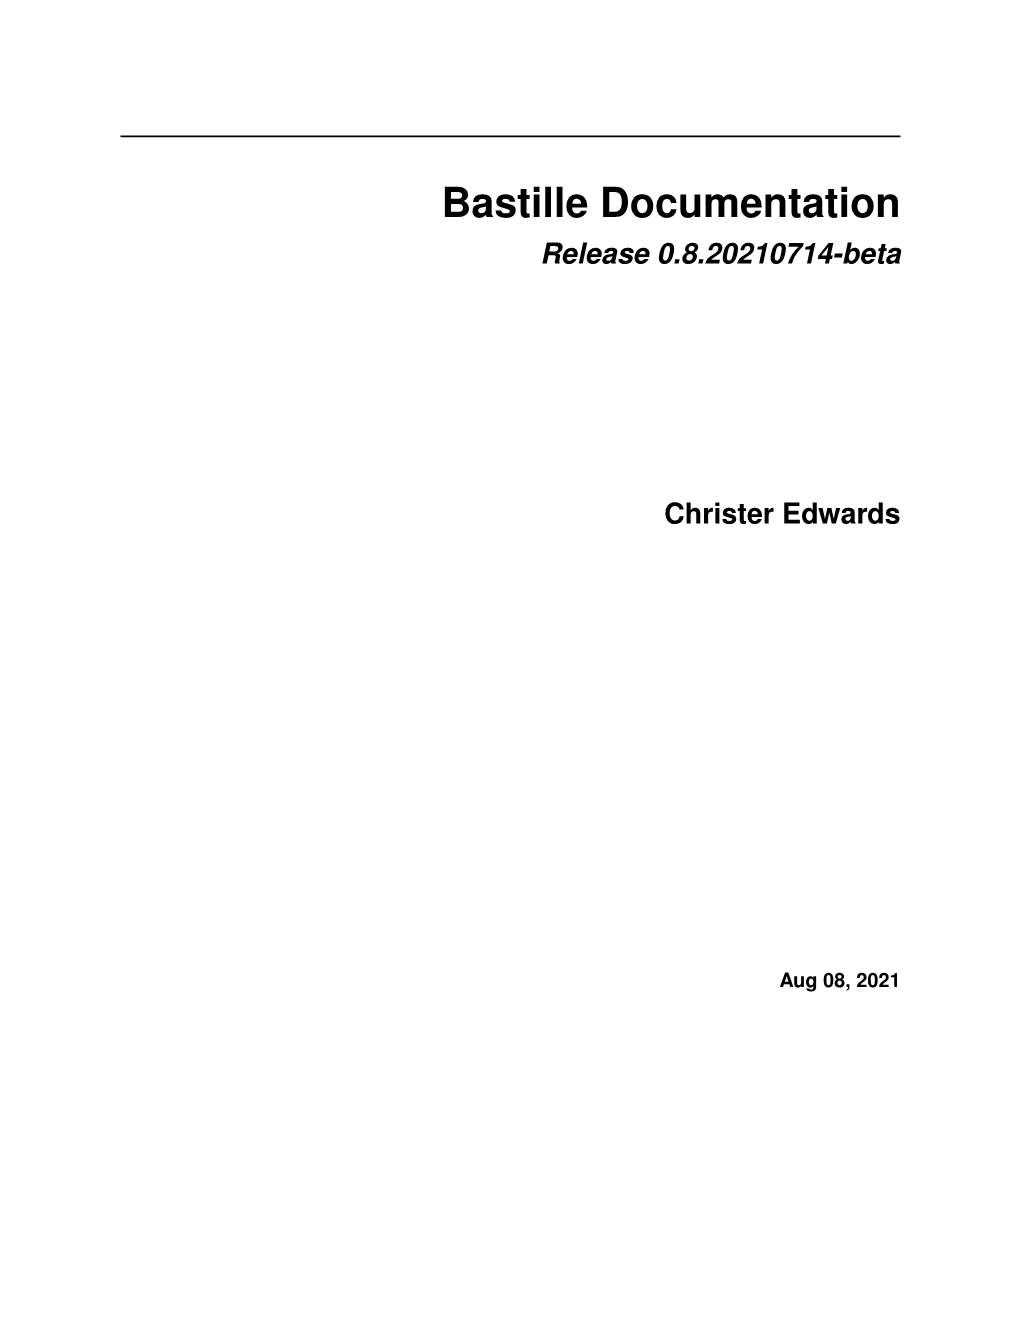 Bastille Documentation Release 0.8.20210714-Beta